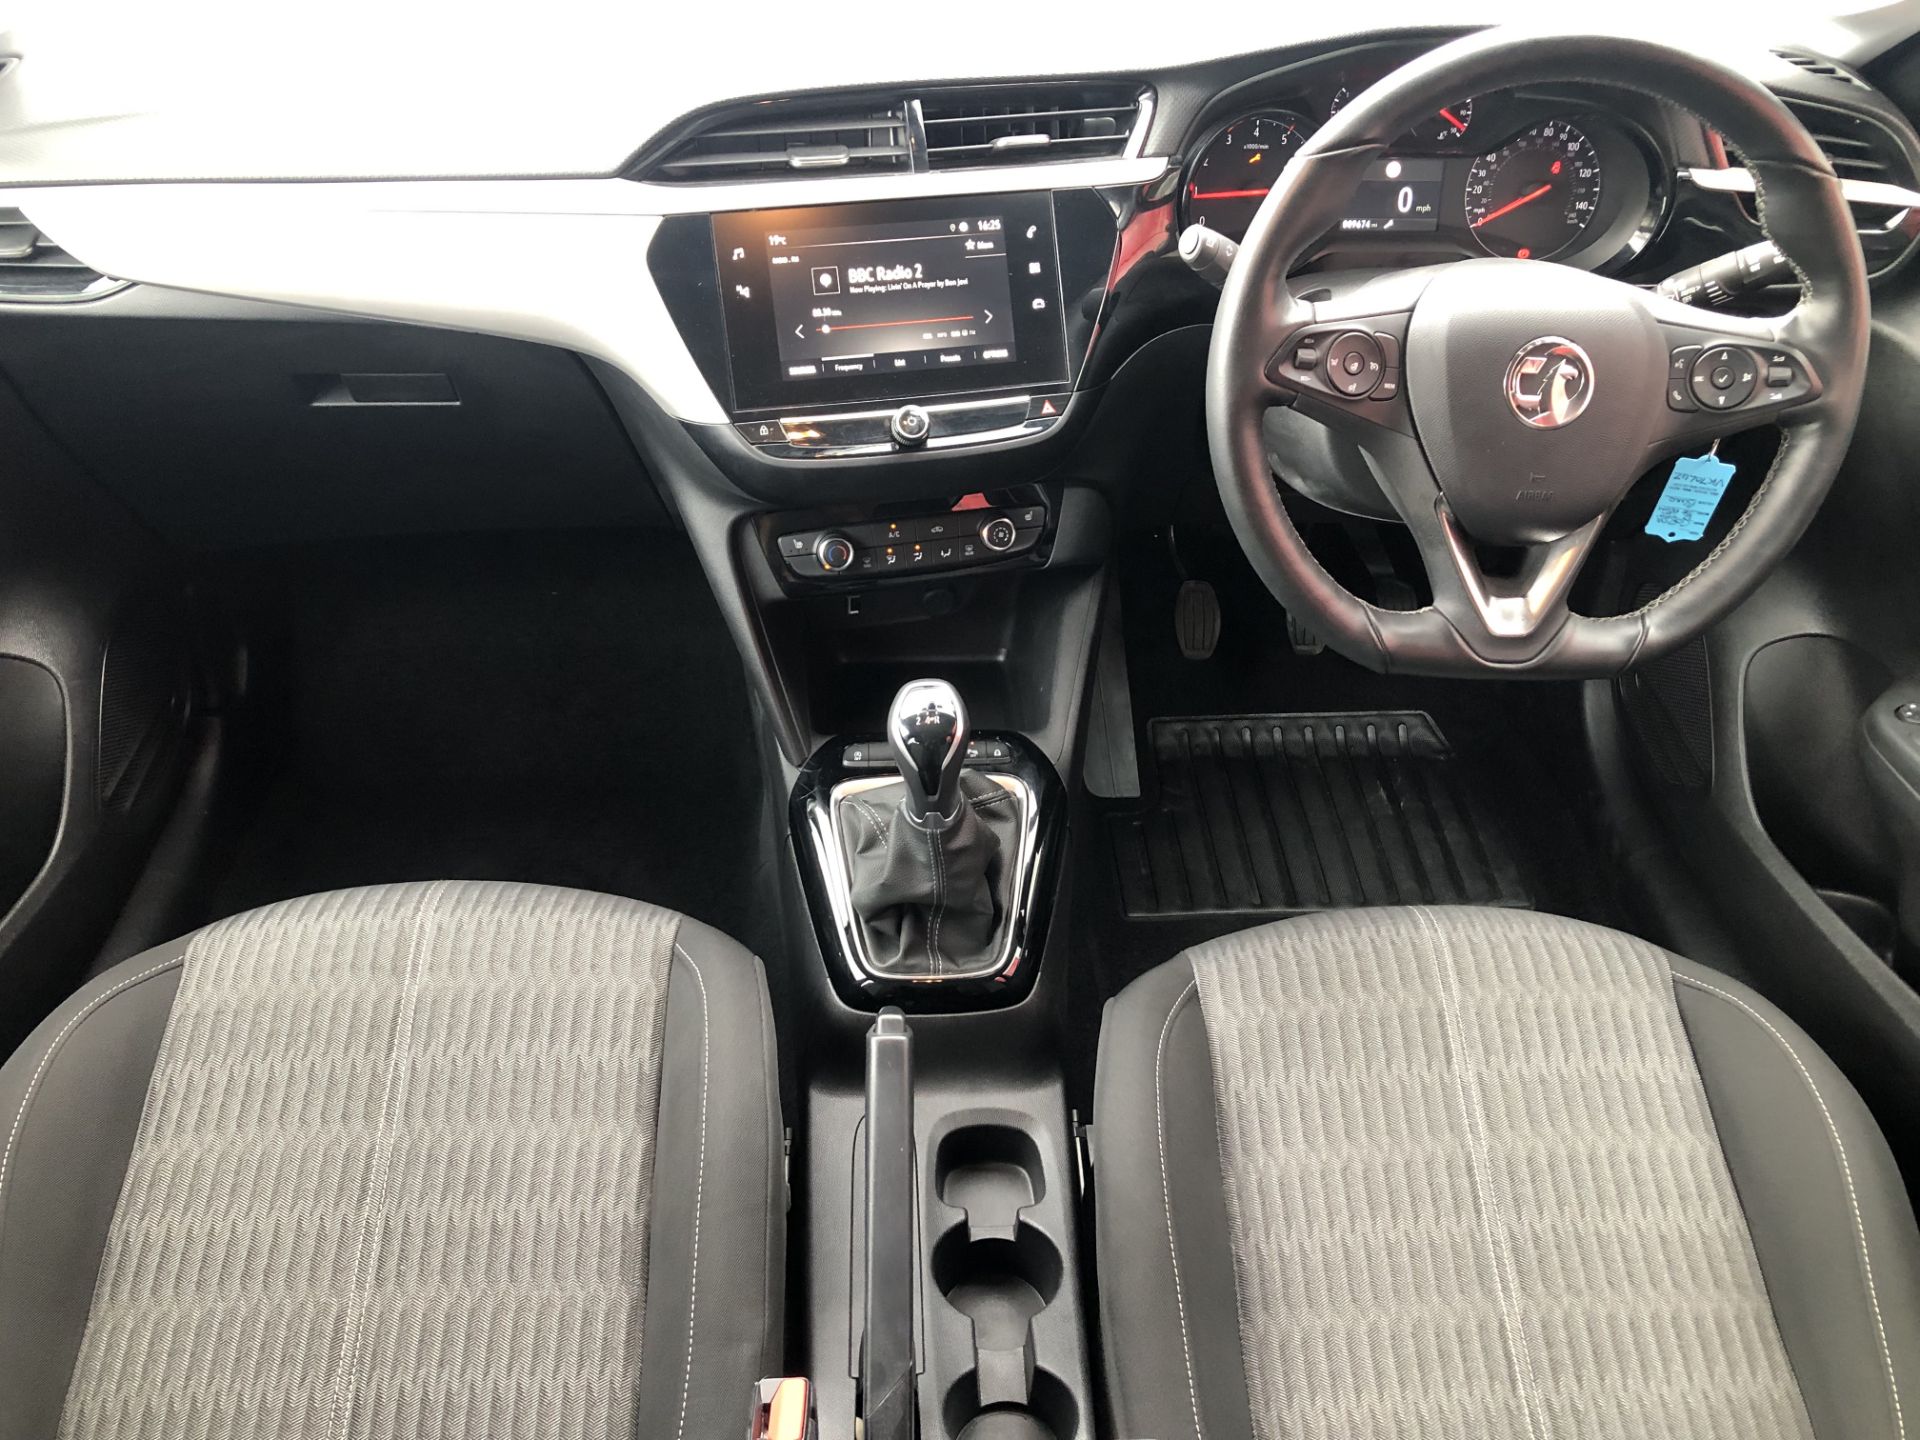 Vauxhall Corsa 1.2 (75ps) SE Premium 5dr, Registration: VK70LUZ, Date First Registered: 30/09/ - Image 6 of 7